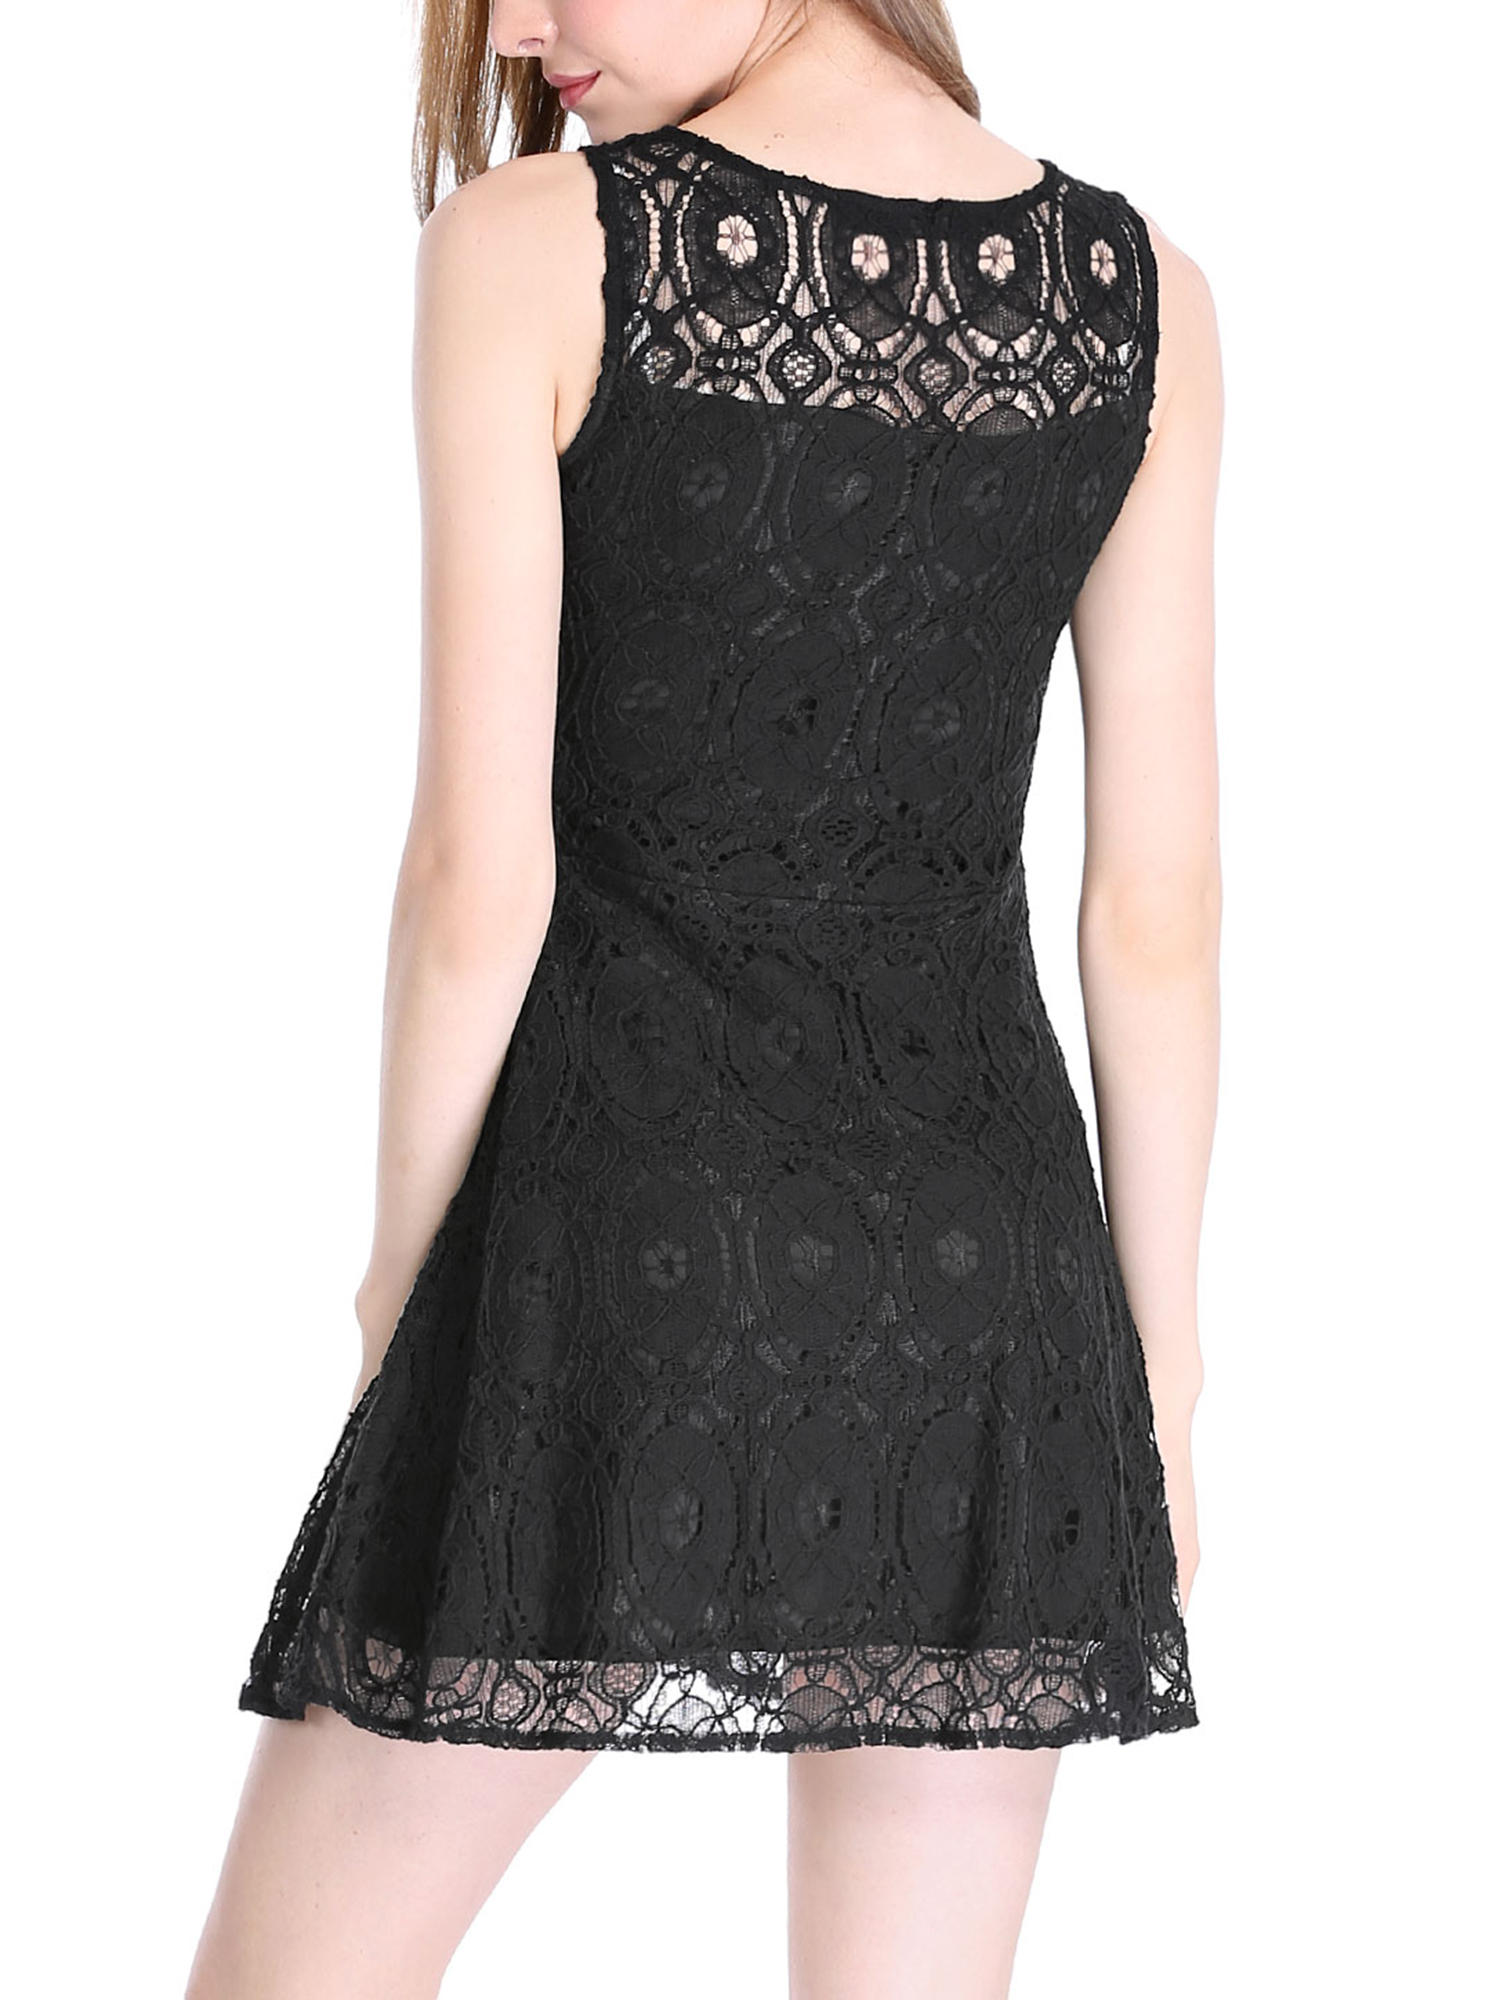 MODA NOVA Junior's Floral Lace Sleeveless Semi Sheer Flare Mini Dress Black L - image 5 of 6